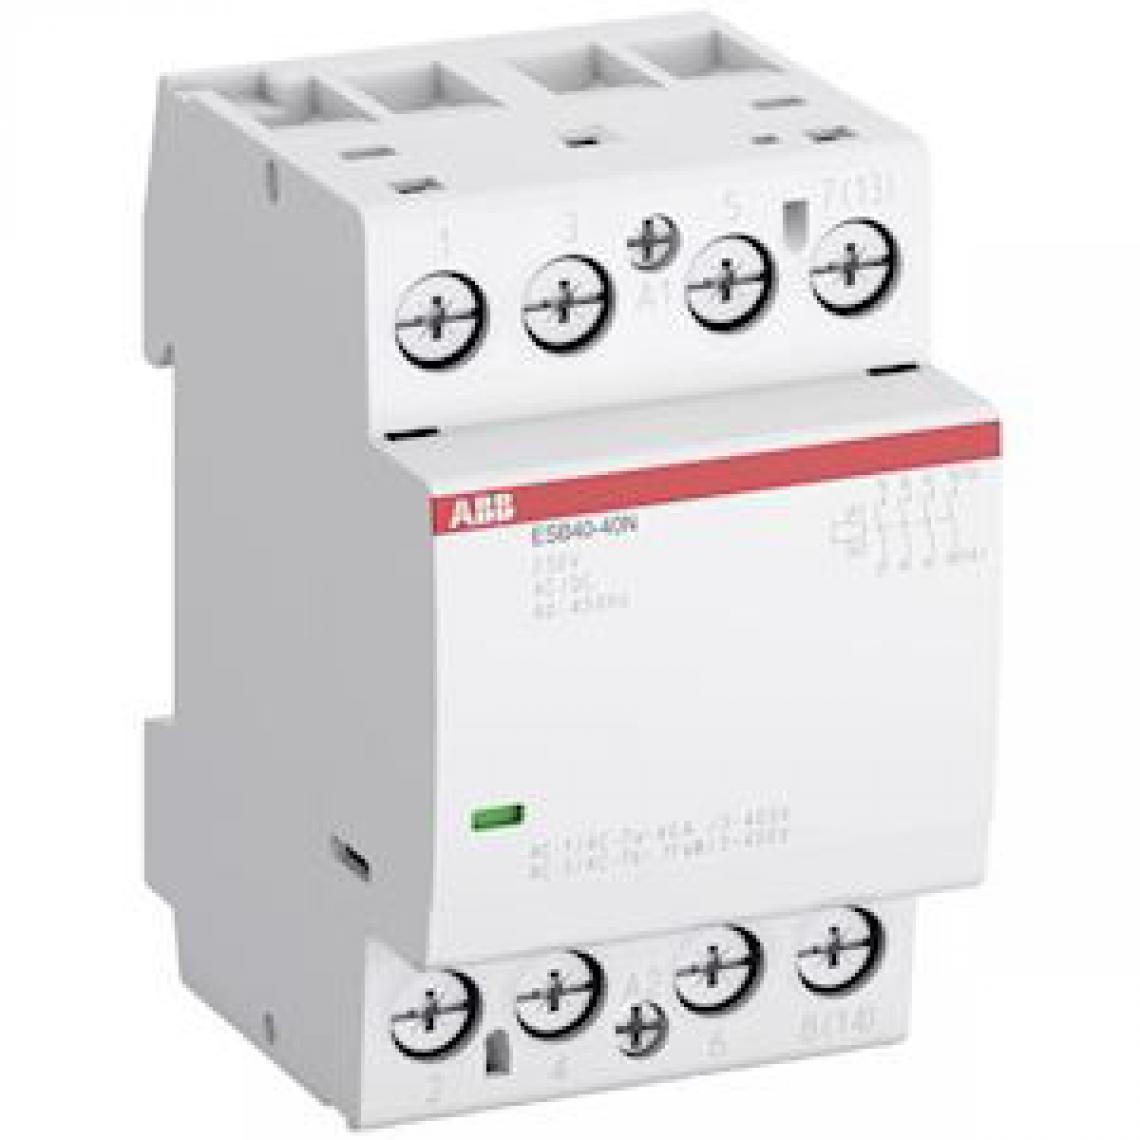 Abb - contacteur modulaire - abb esbn - 40a - 4 contacts no - 230 volts - abb 1sae341111r0640 - Télérupteurs, minuteries et horloges